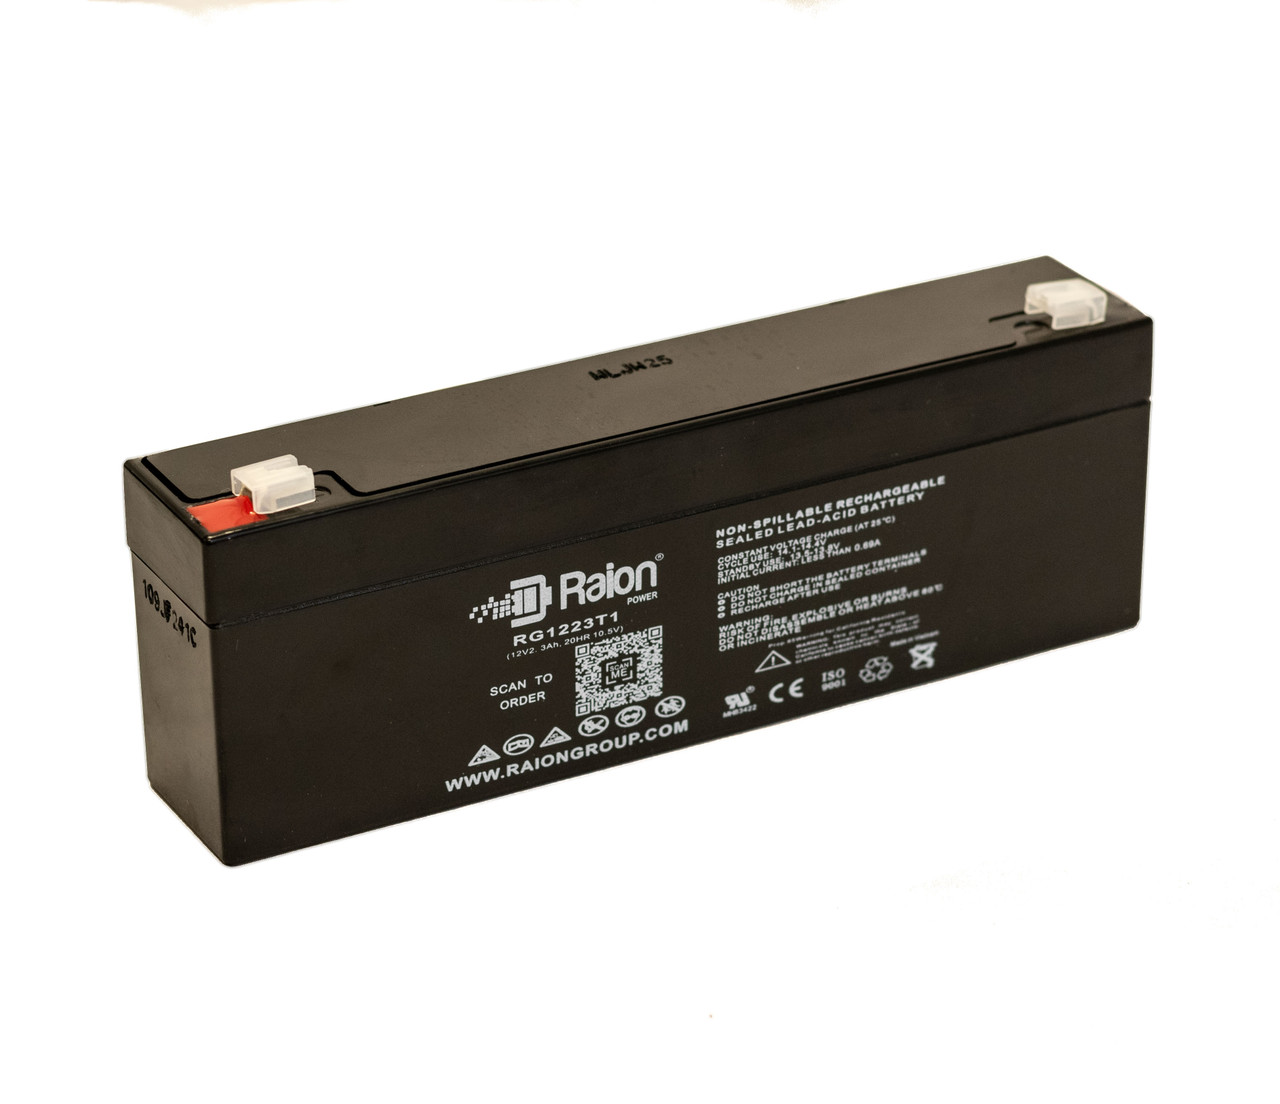 Raion Power RG1223T1 Replacement Battery for Abbott Laboratories Defibrillator DH2